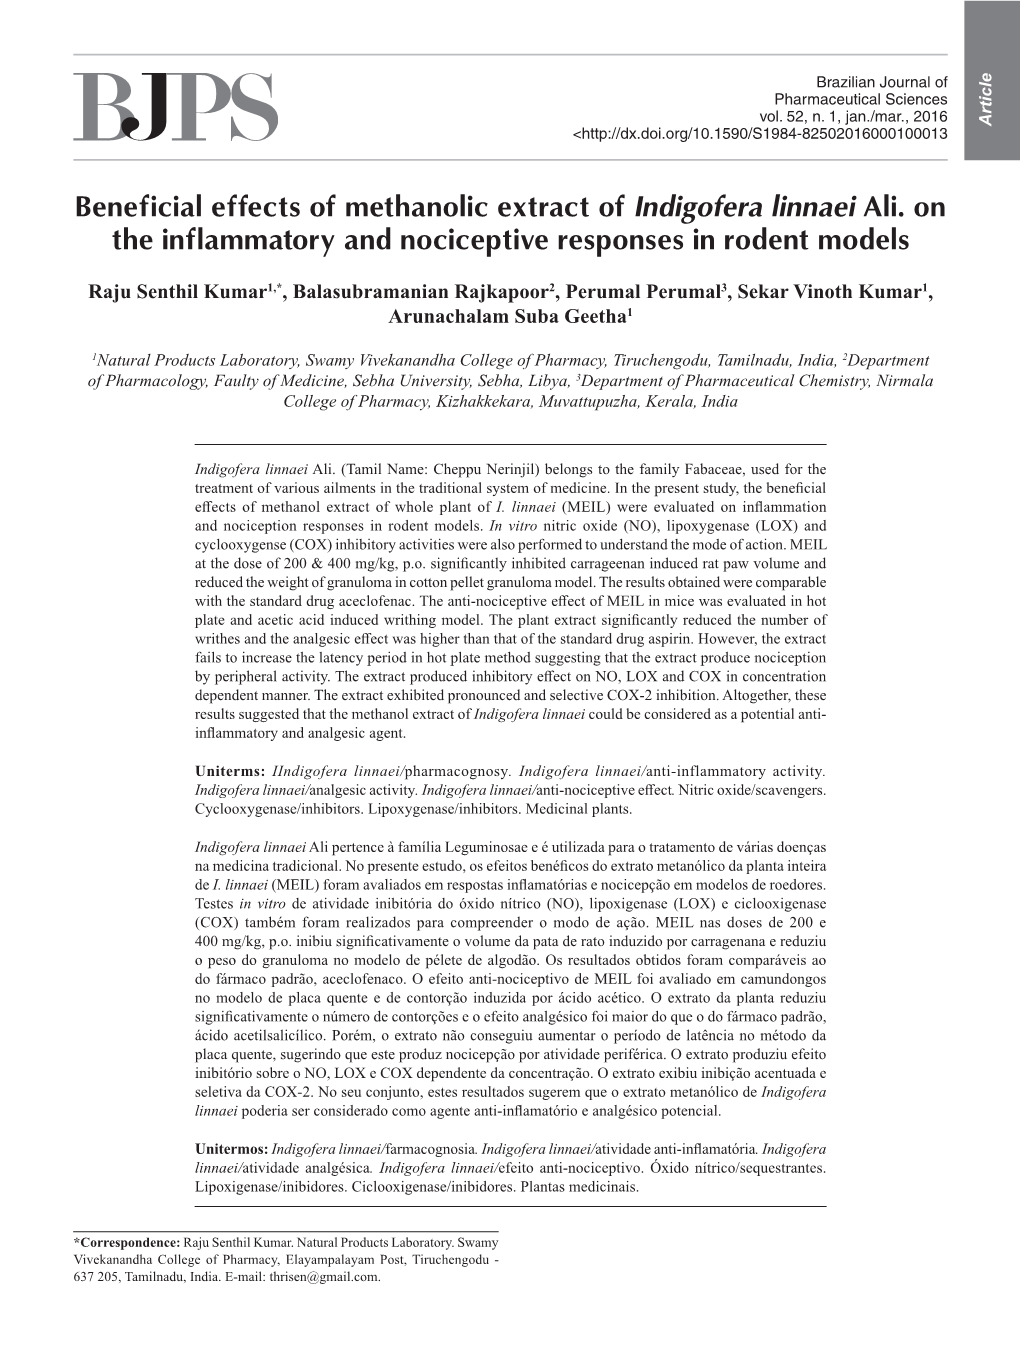 Beneficial Effects of Methanolic Extract of Indigofera Linnaei Ali. on The